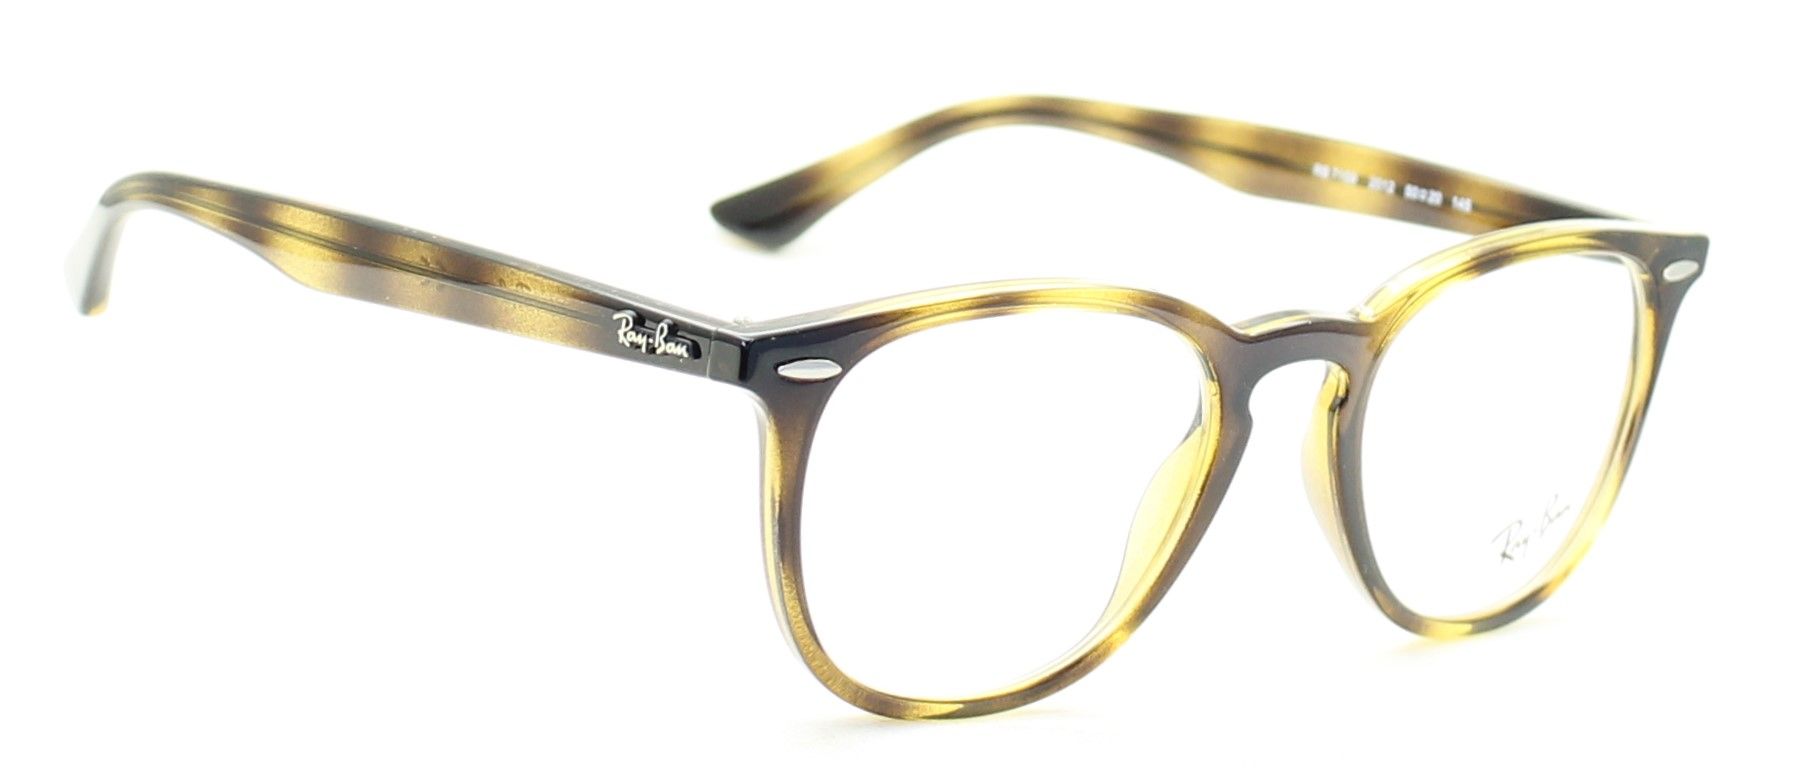 RAY BAN RB 7159 2012 50mm RX Optical FRAMES RAYBAN Glasses Eyewear ...